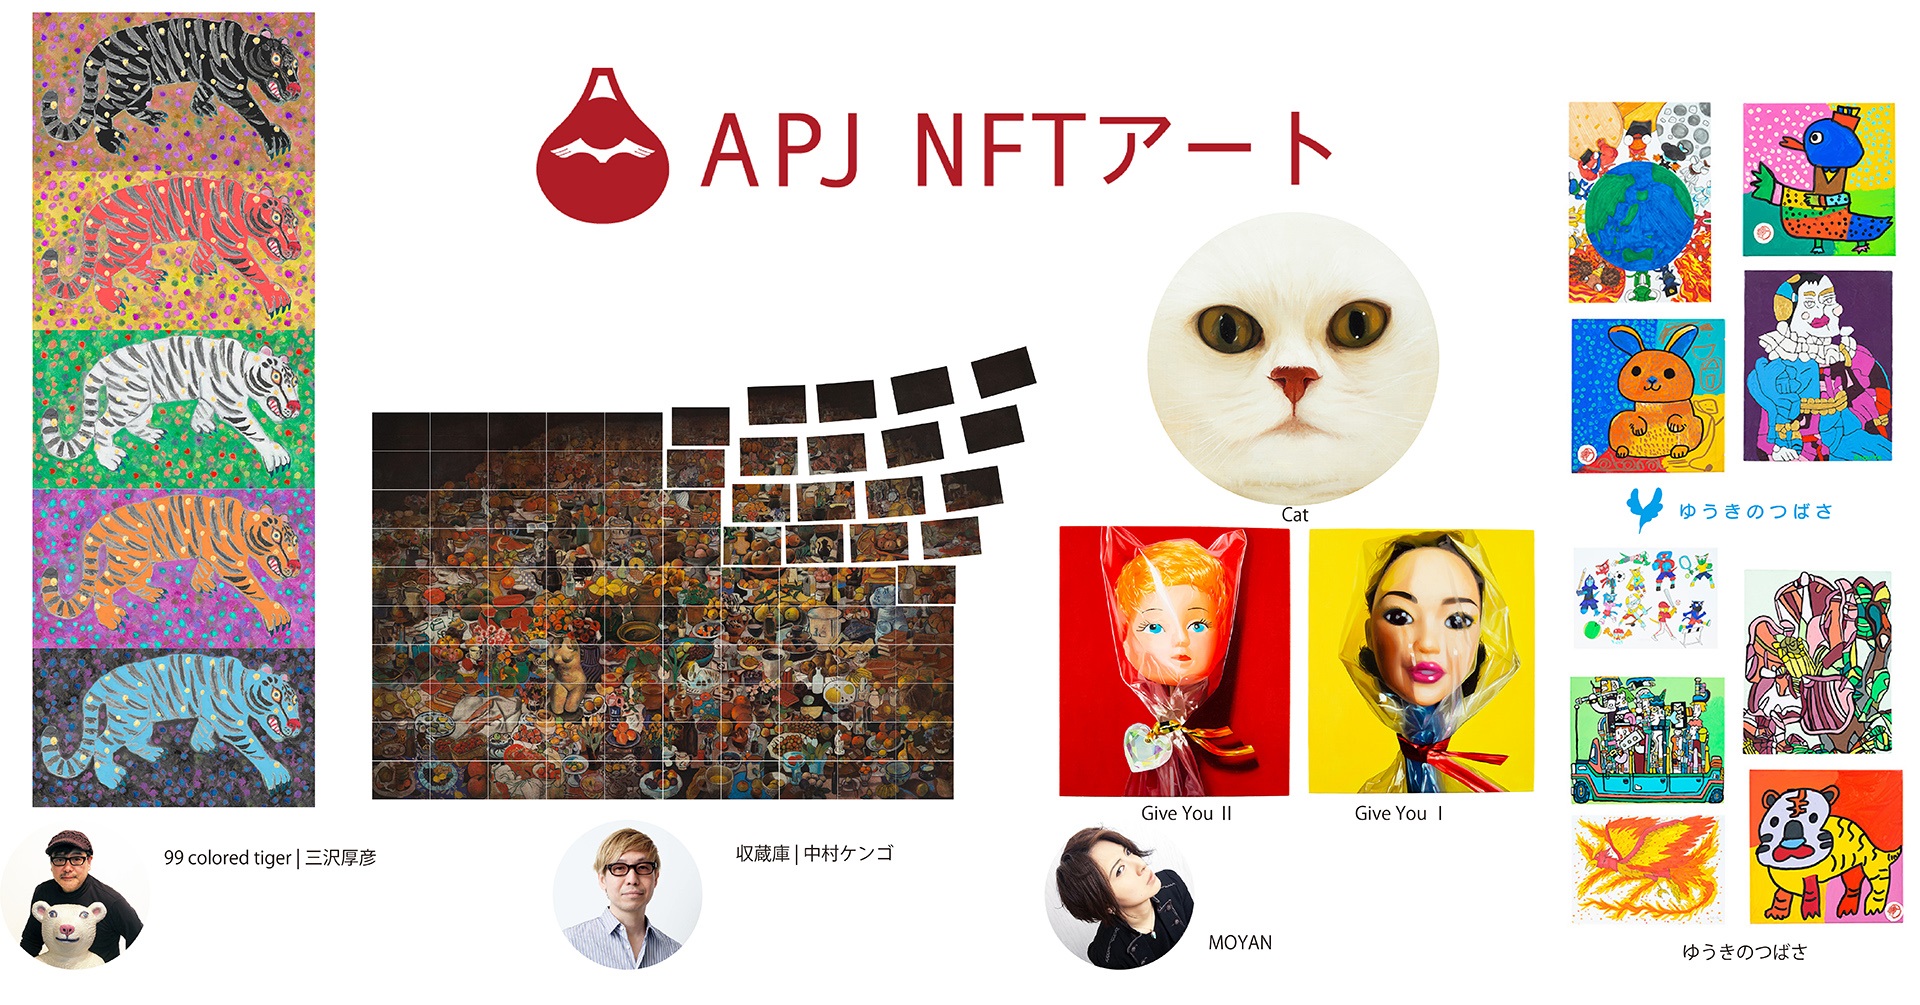 「Rakuten NFT」でアートパワーズジャパンが展開するNFTアート作品を発売